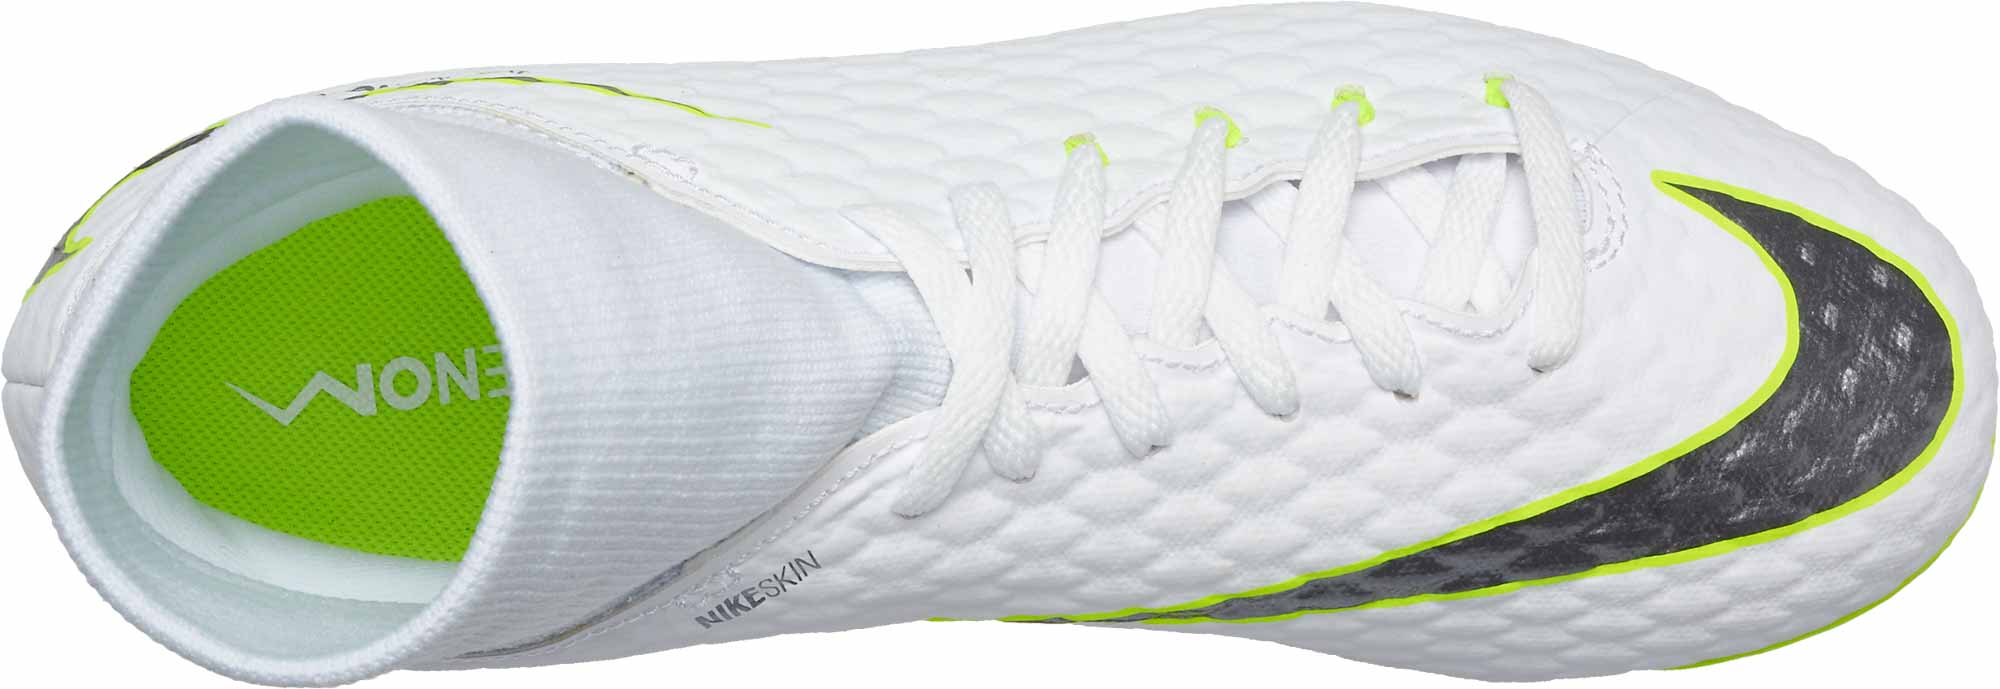 Nike Youth Hypervenom Phantom III Academy FG Soccer Cleats